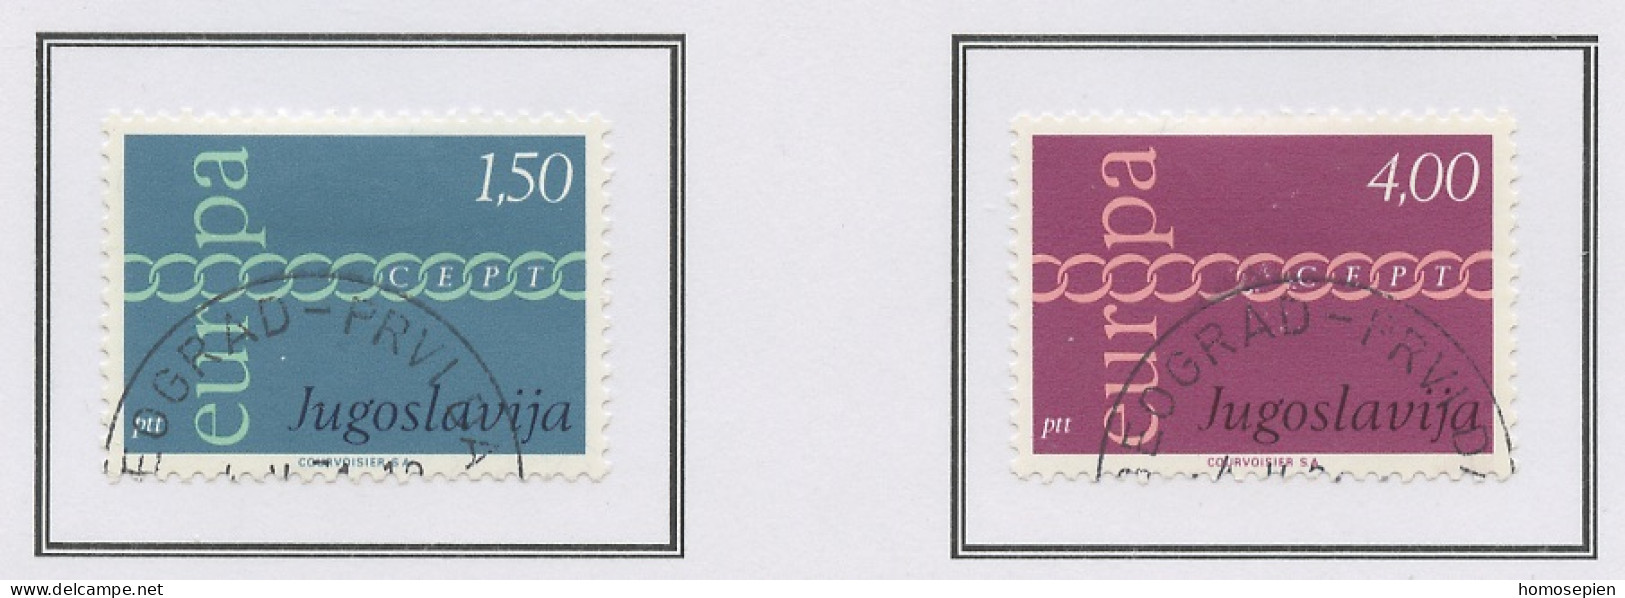 Yougoslavie - Jugoslawien - Yugoslavia 1971 Y&T N°1301 à 1302 - Michel N°1416 à 1417 (o) - EUROPA - Used Stamps